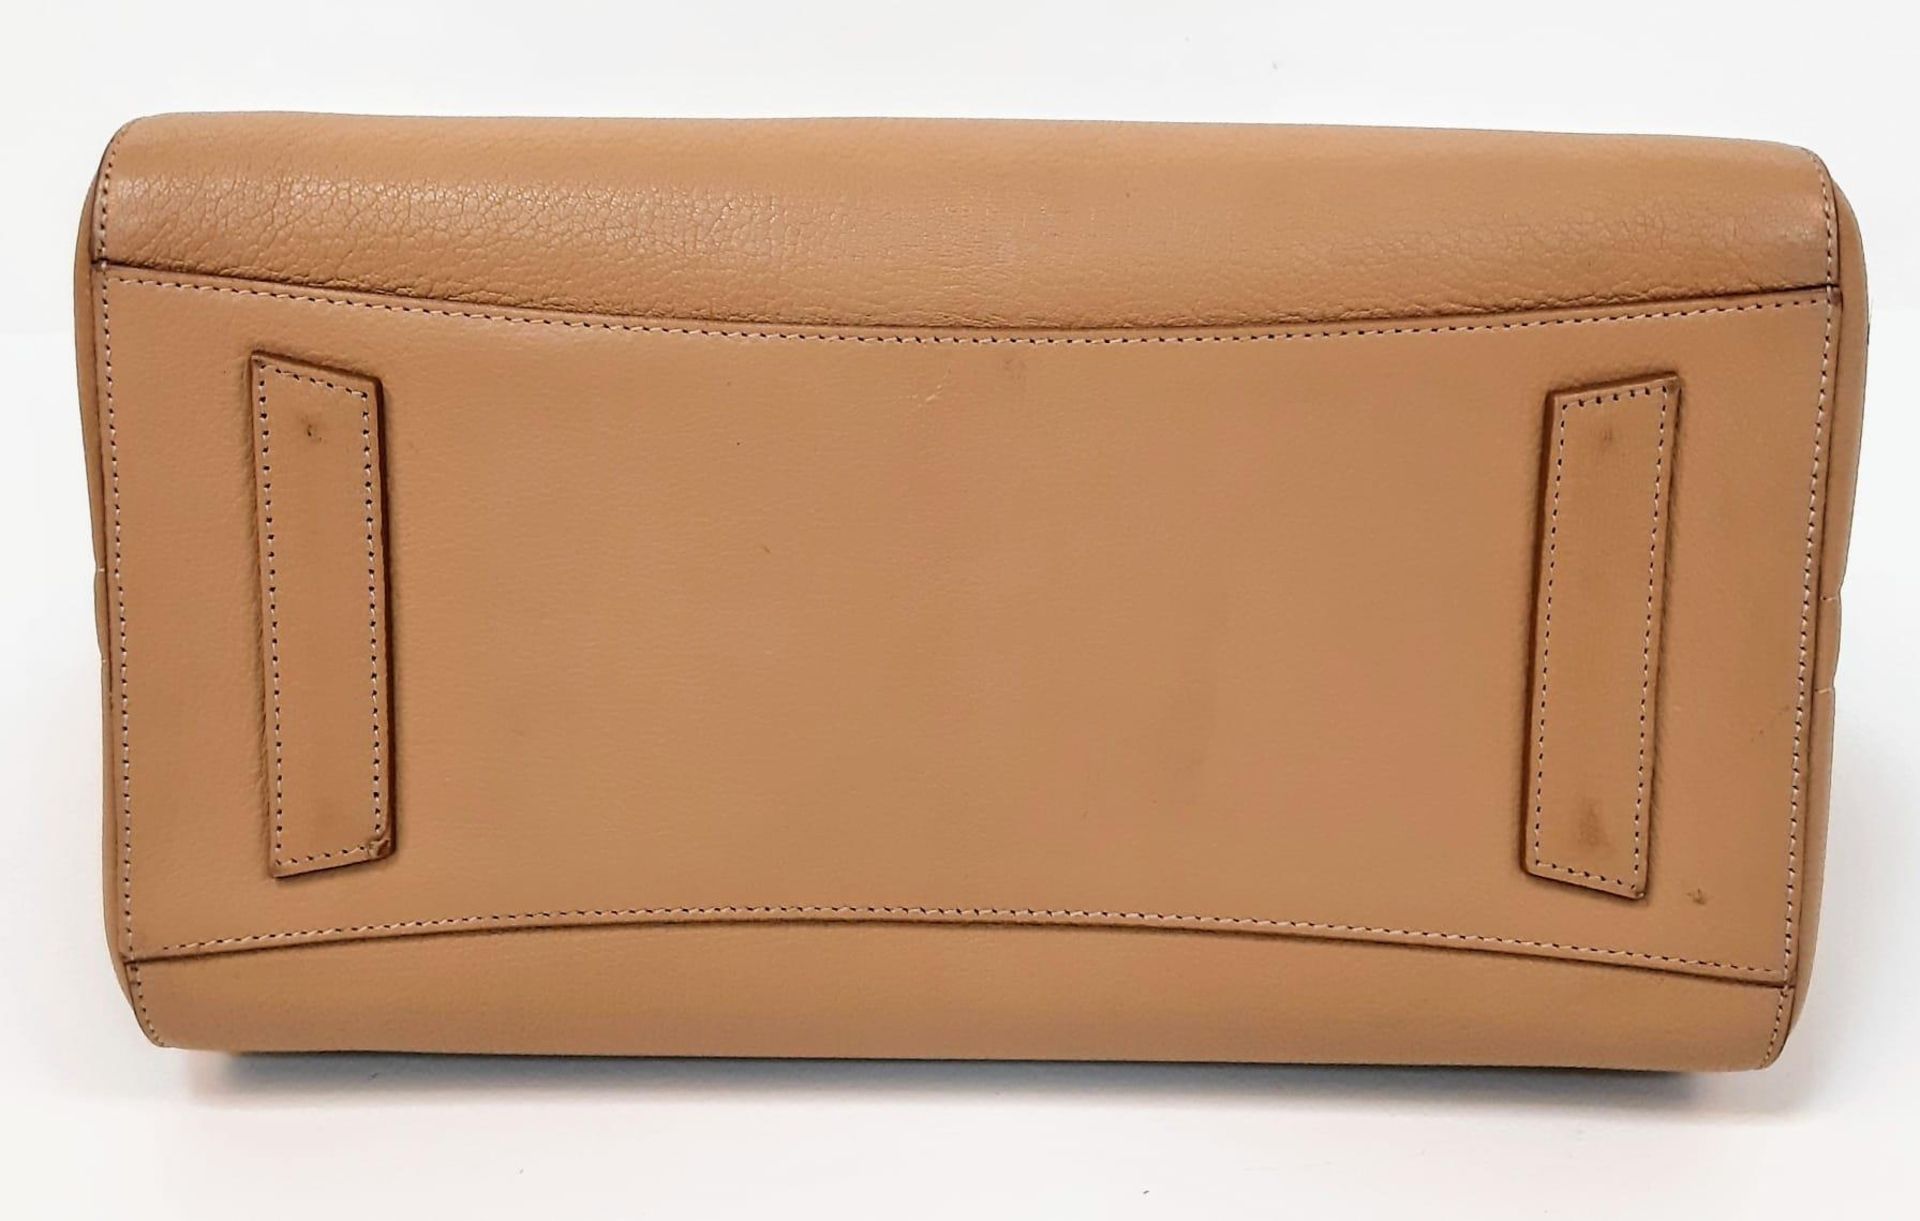 A Givenchy Antigona Leather Shoulder Bag. Brown leather textured exterior. Cream textile interior - Image 5 of 7